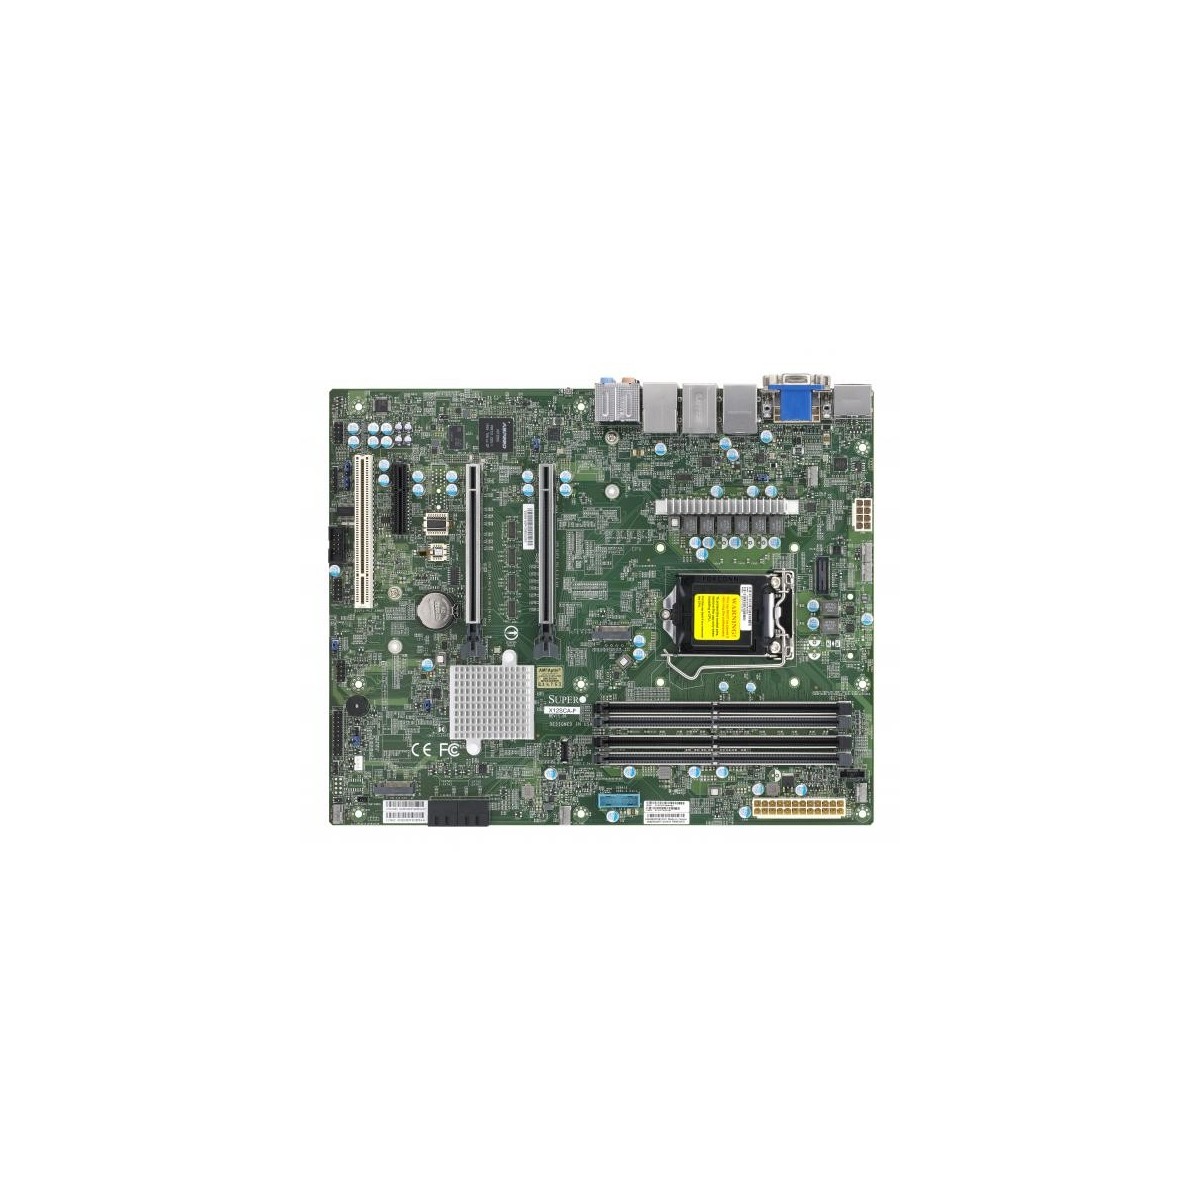 Supermicro mainboard server MBD-X12SCA-F-O, W-1200 CPU, 4 DIMM slots, Intel W480 controller for 4 SATA3 (6 Gbps) ports RAID 0,1,